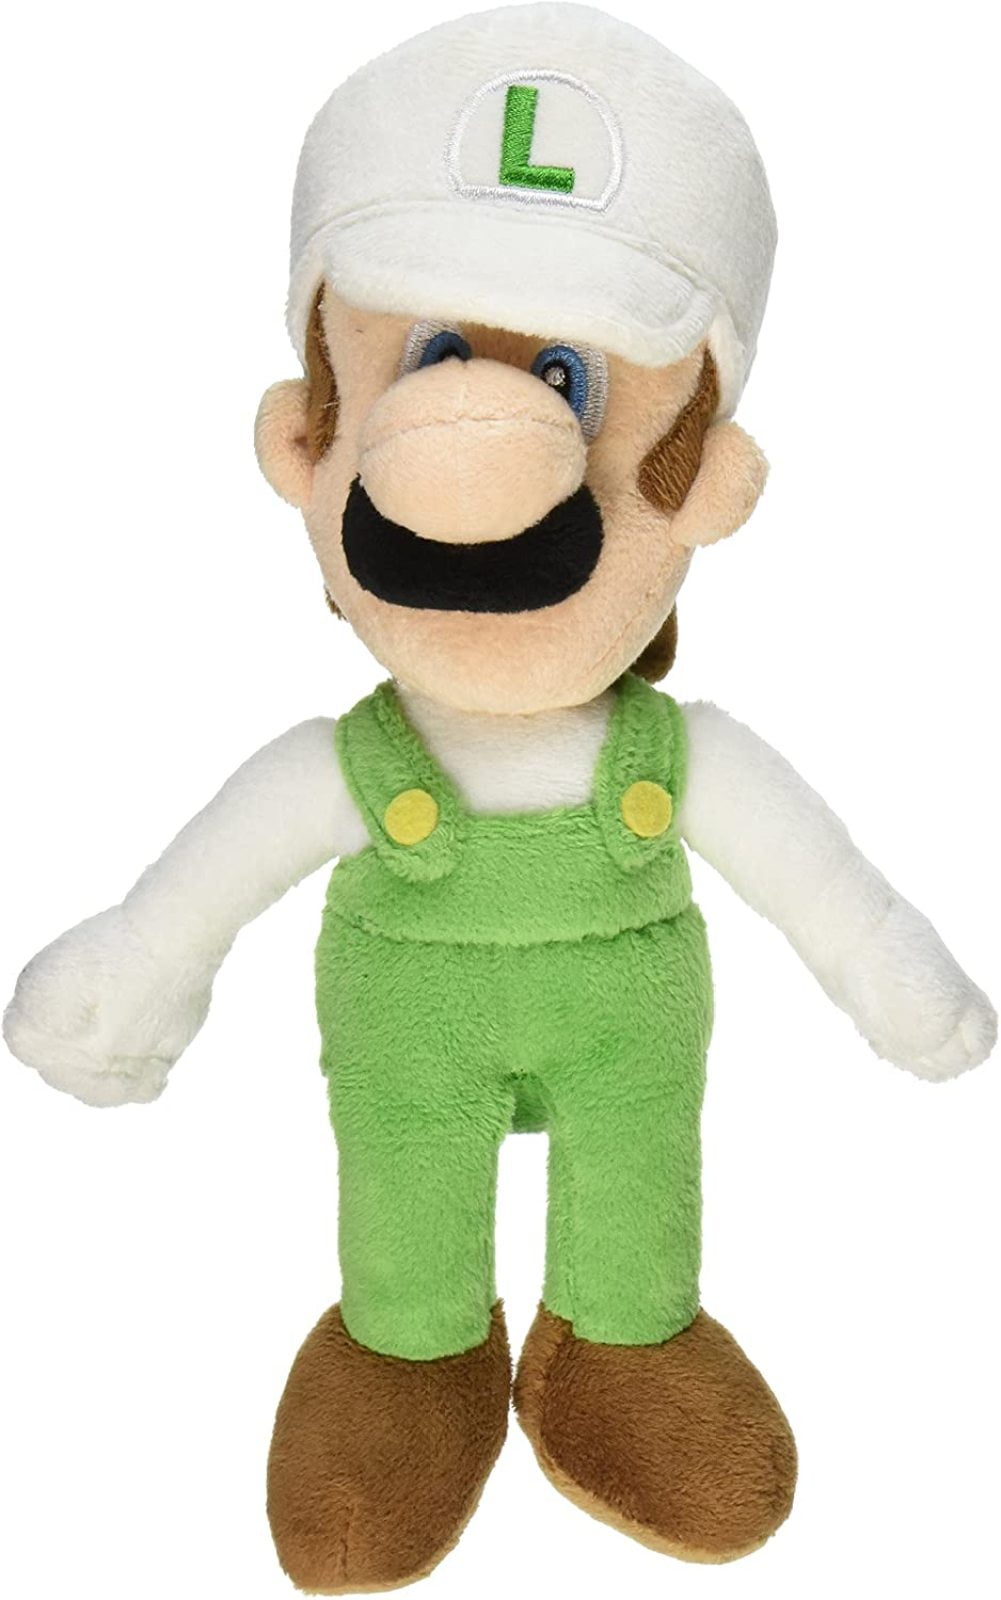 Official Super Mario Bros Luigi Green Plush Soft Toy 7.5" Sanei Japan Import 